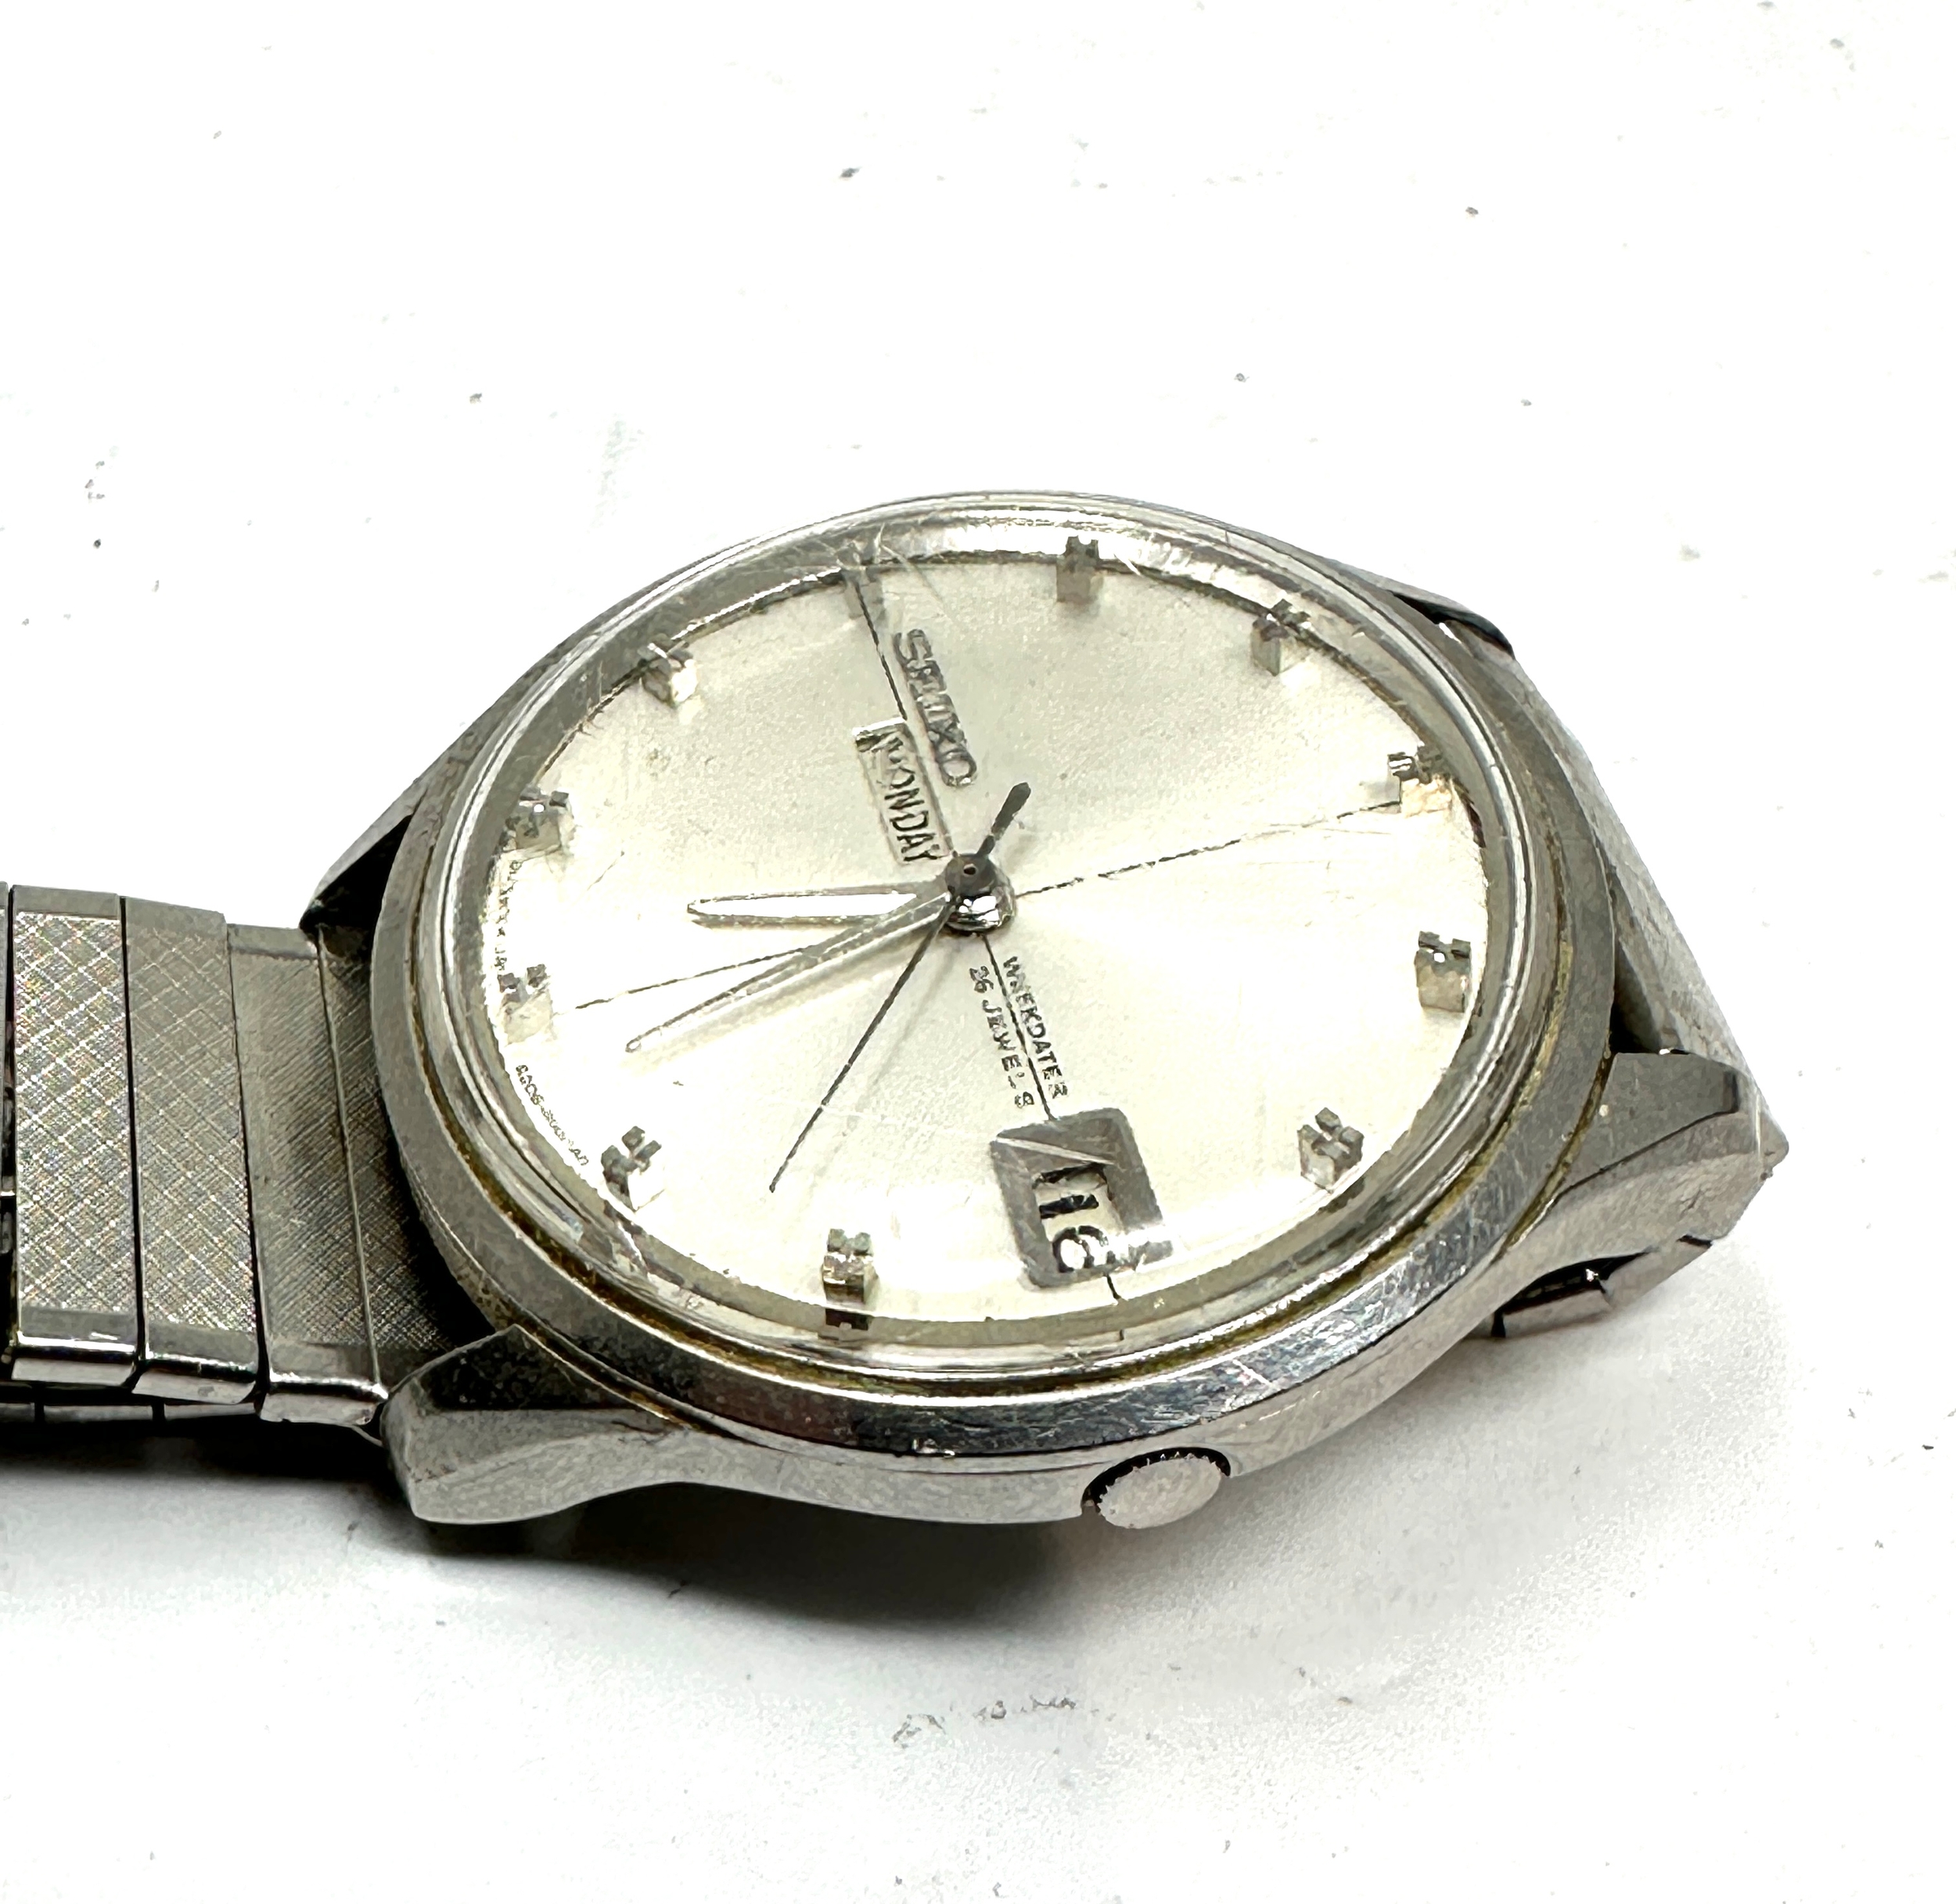 Vintage Seiko Weekdater 26 jewel gents wristwatch the watch is ticking - Image 3 of 6